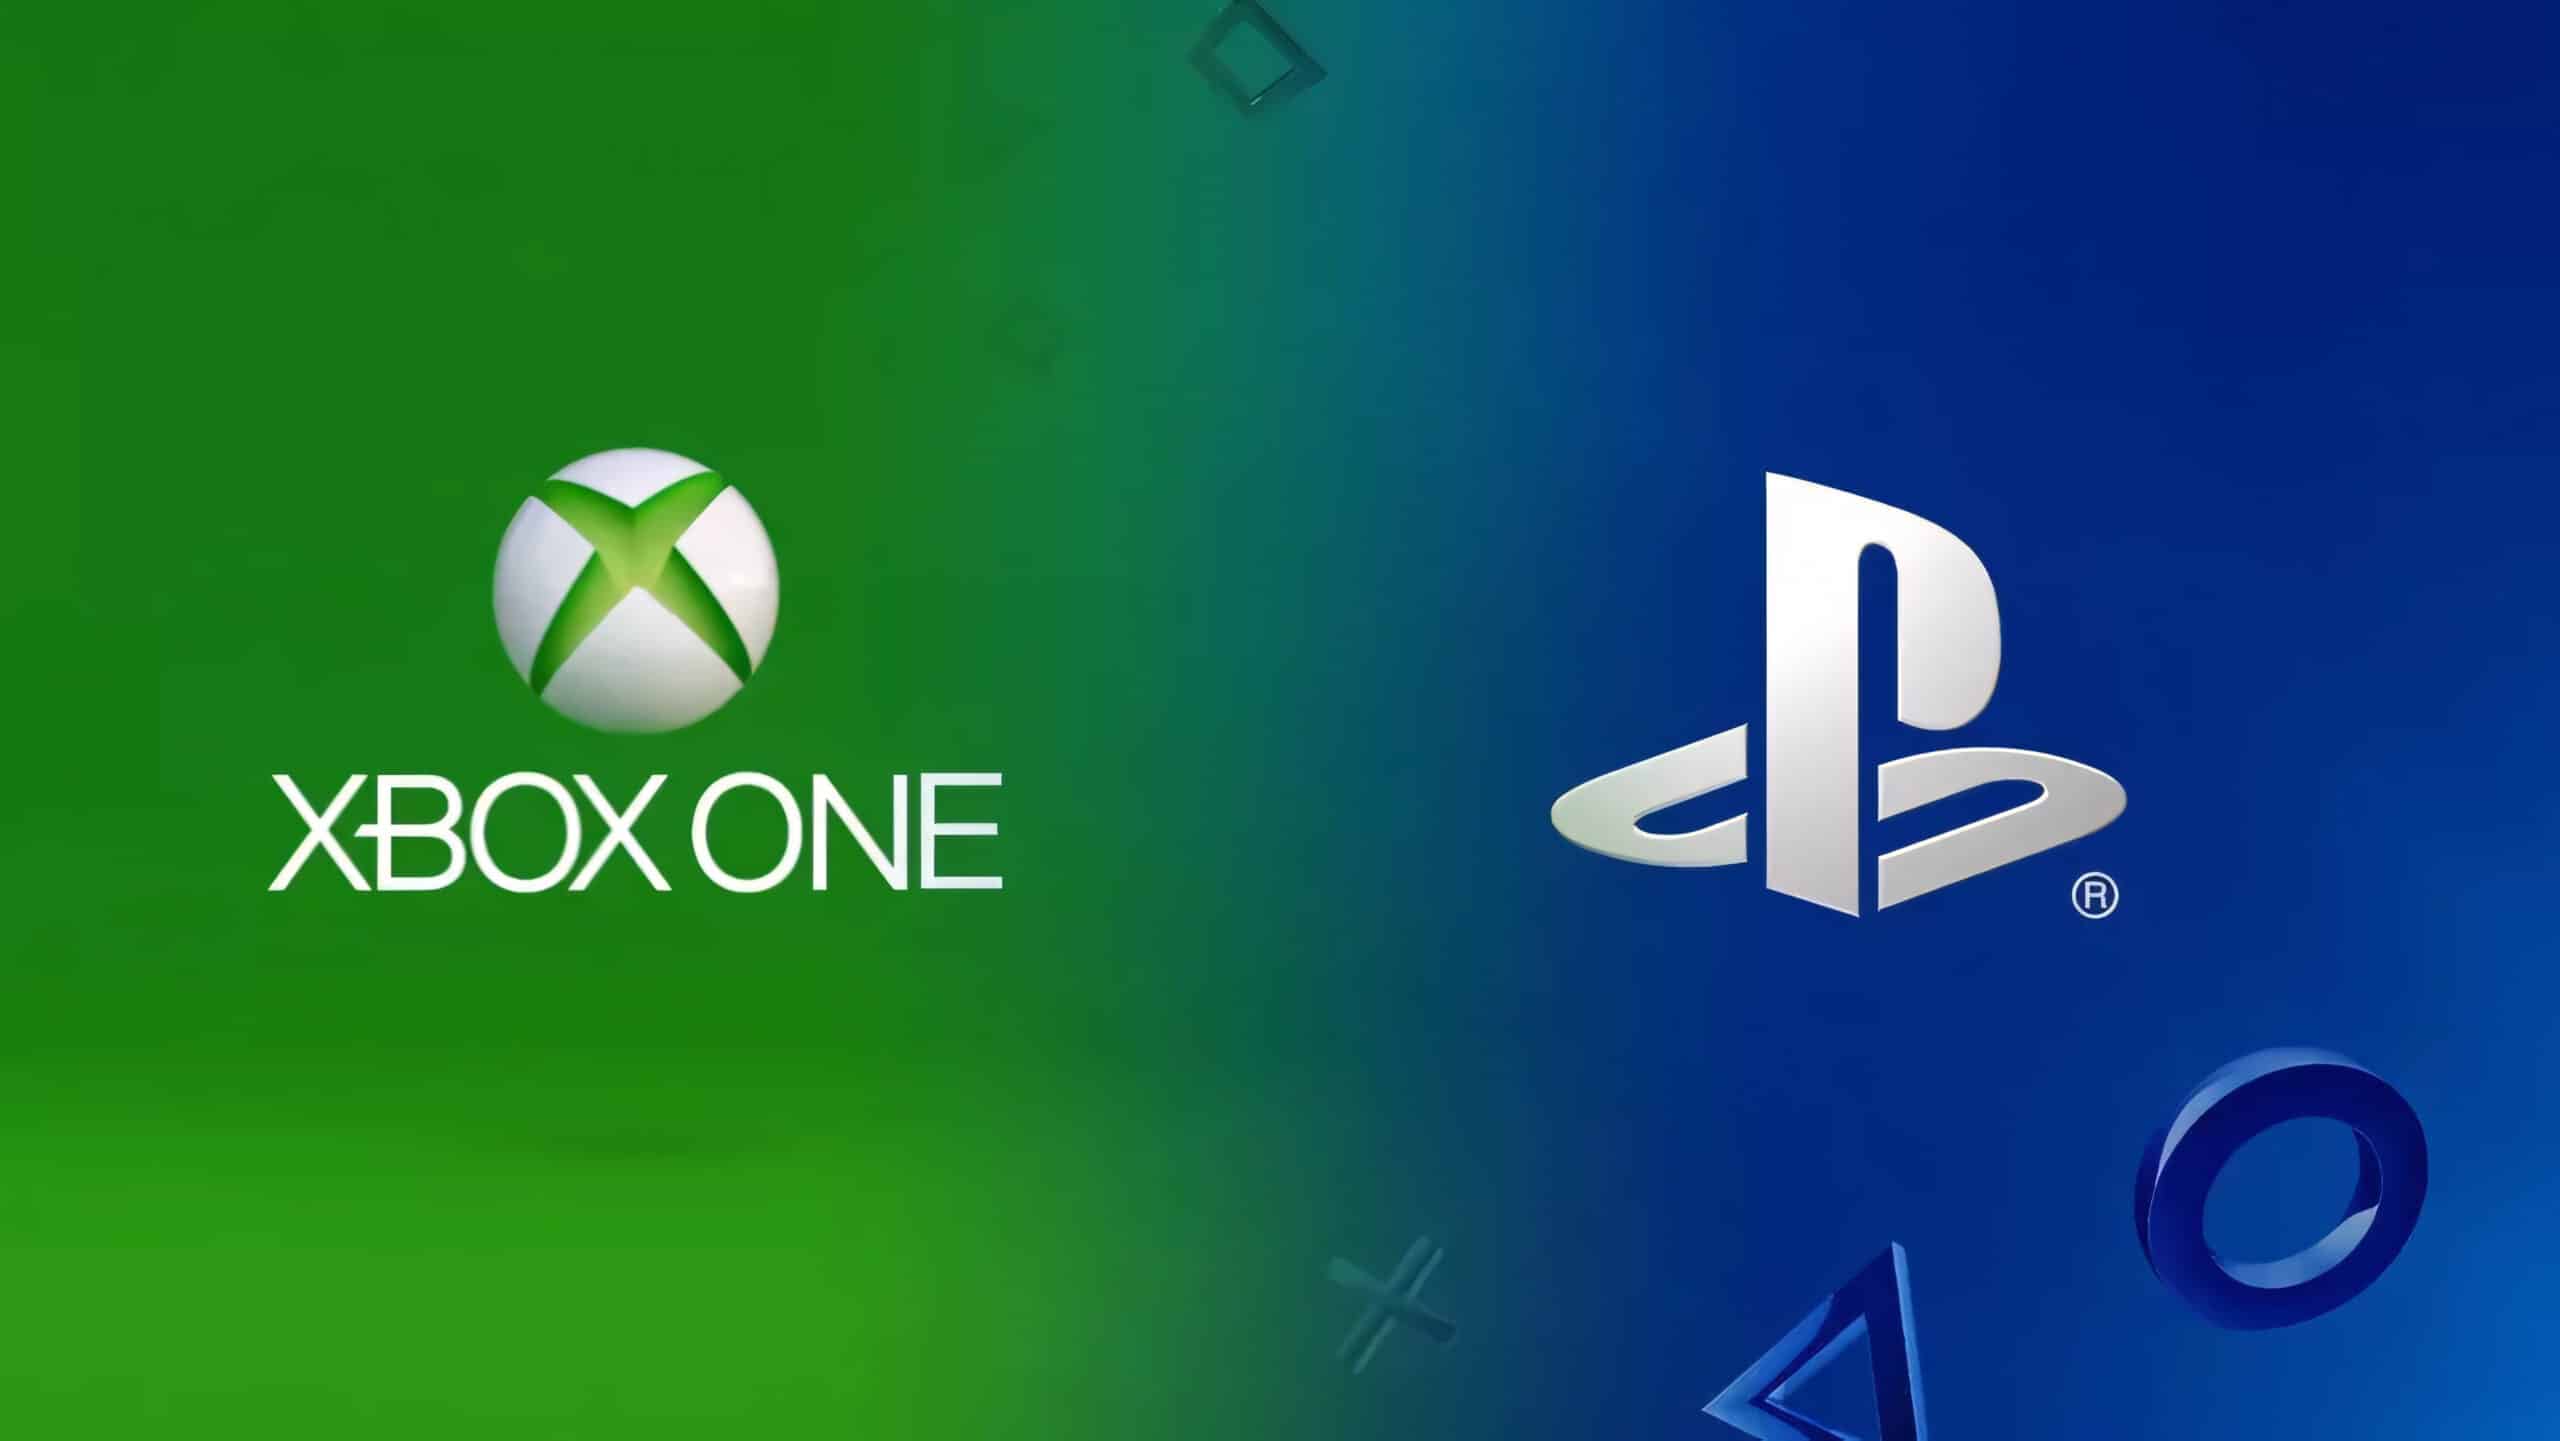 Degrade da logo Xbox One e Playstation